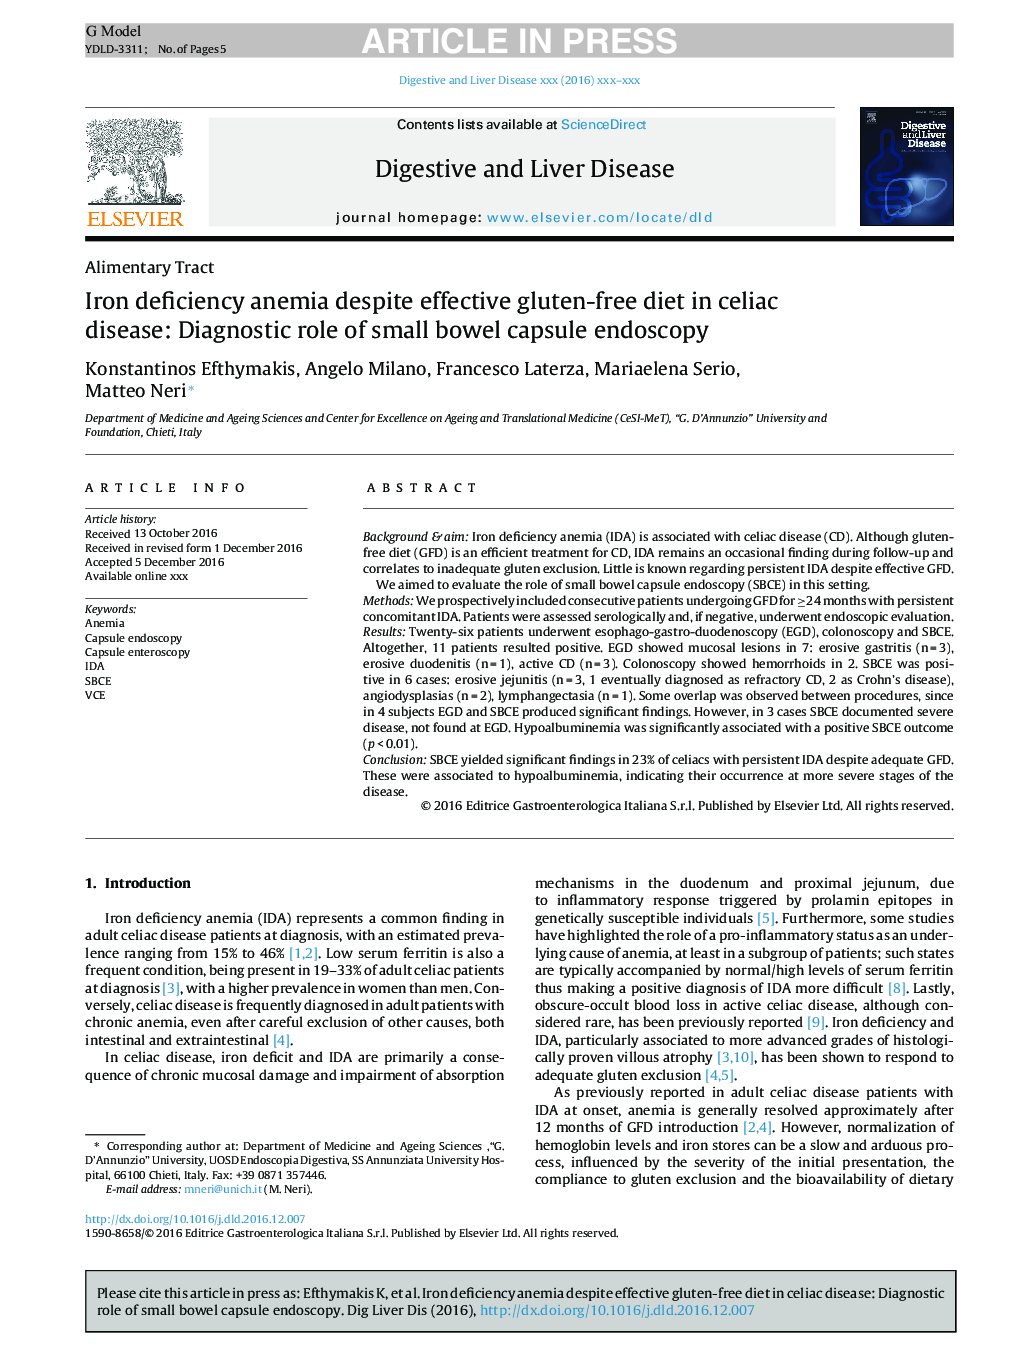 Iron deficiency anemia despite effective gluten-free diet in celiac disease: Diagnostic role of small bowel capsule endoscopy